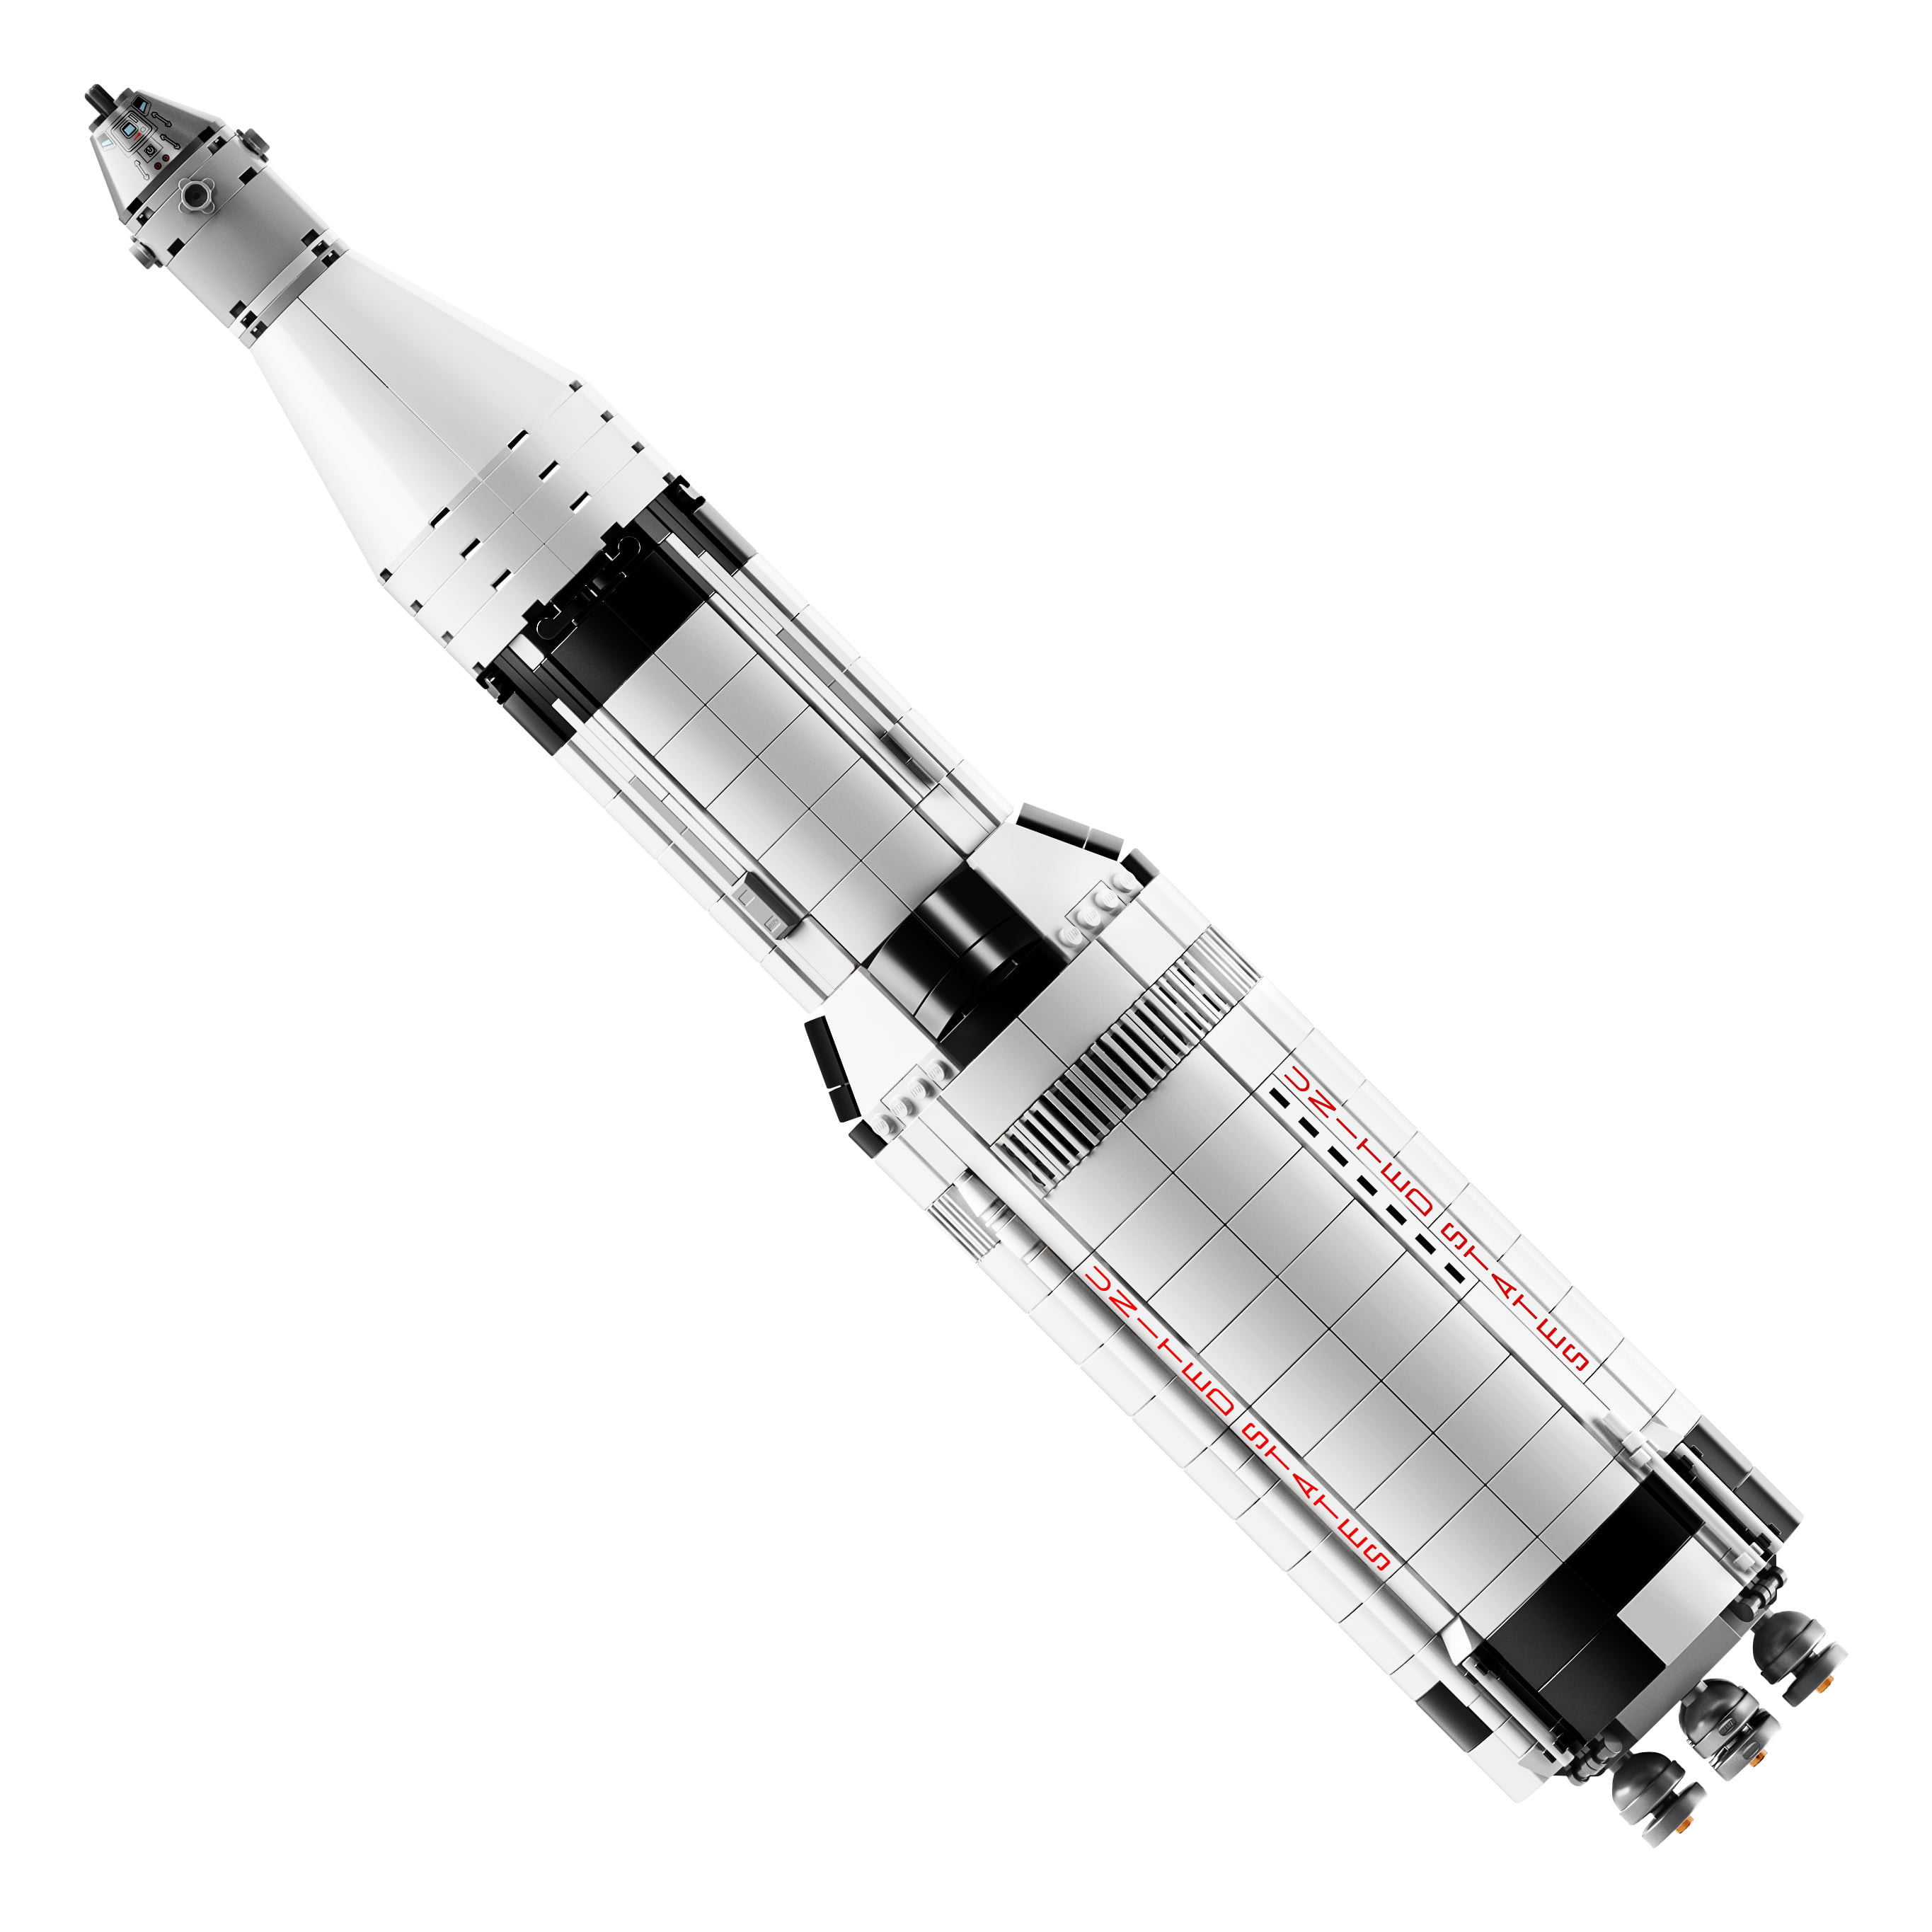 LEGO 21309 Ideas NASA Apollo Saturn V for sale online 